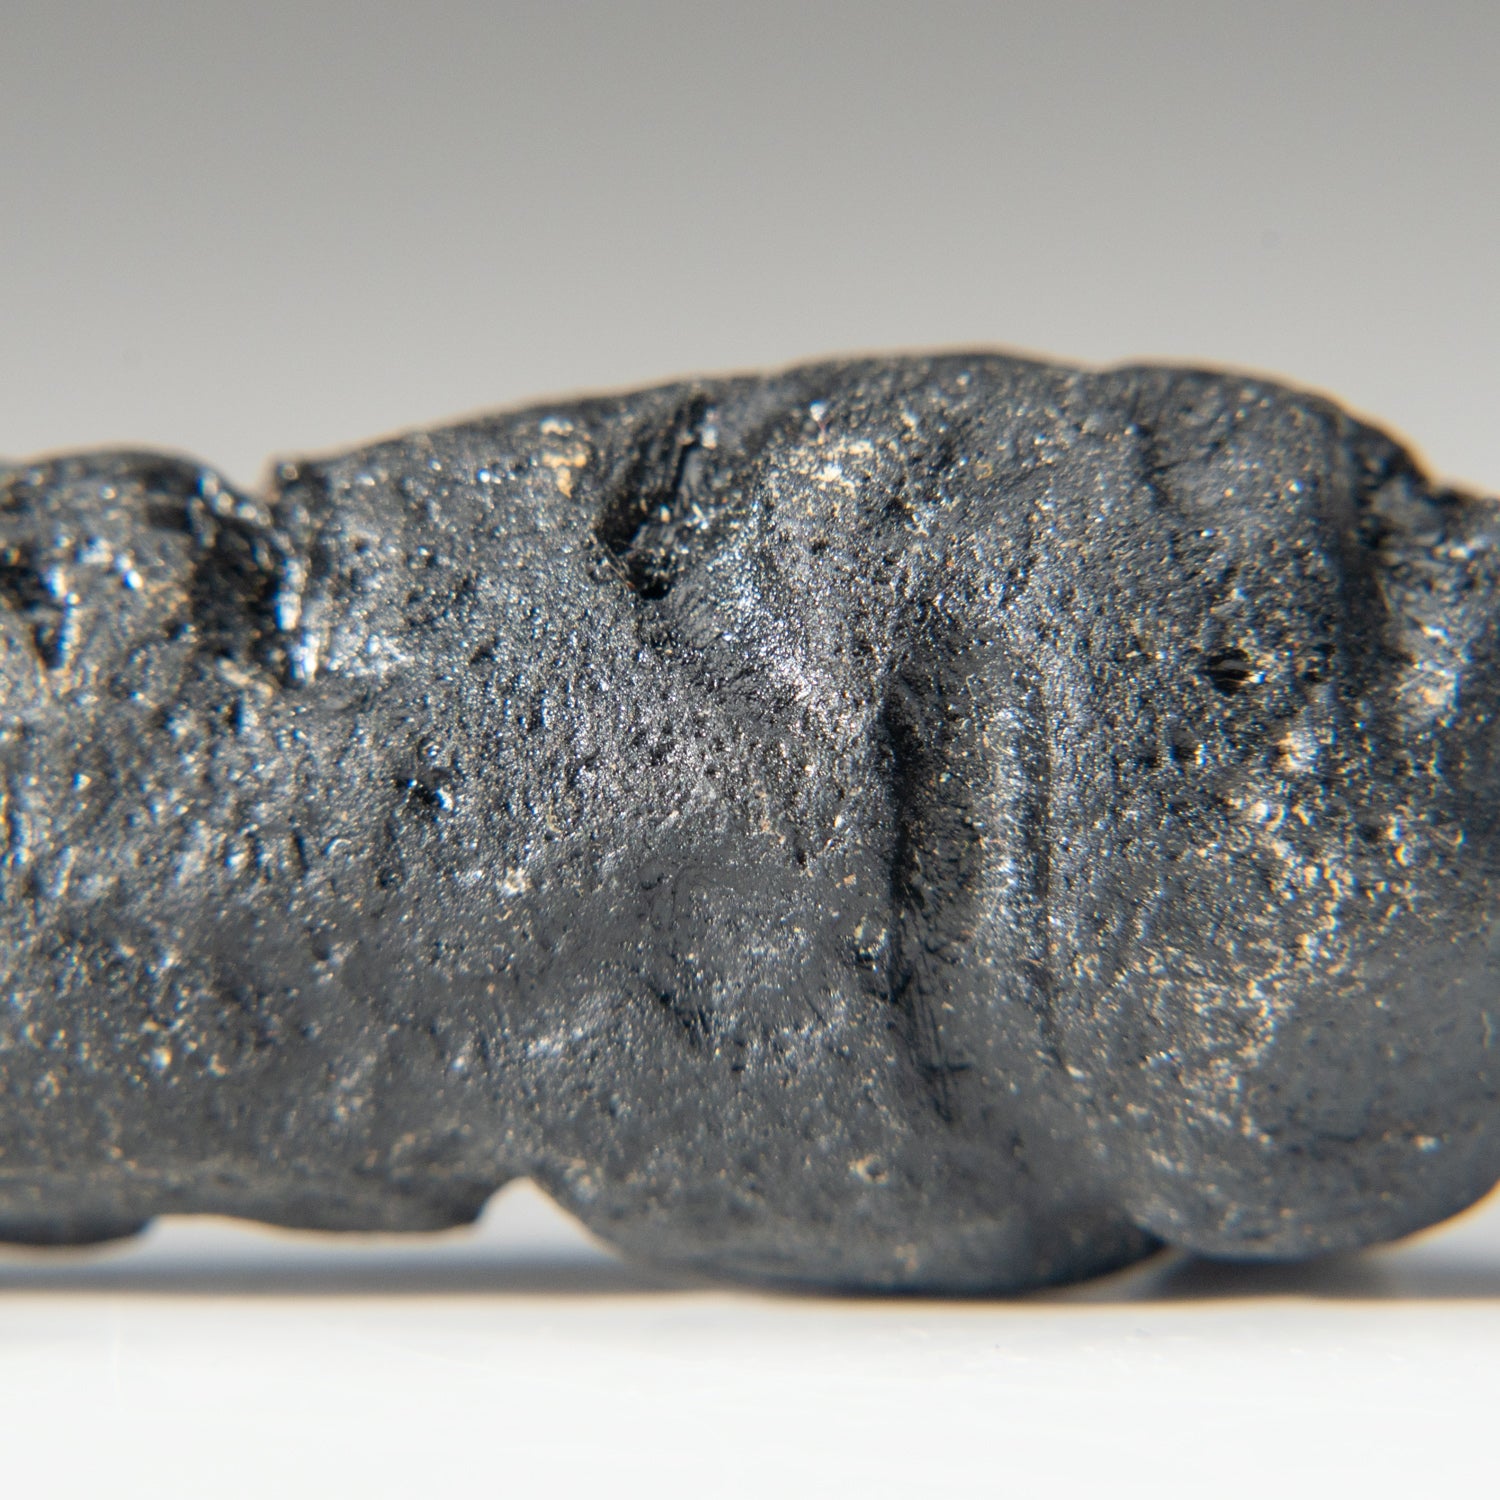 Genuin Museum Quality Indochinite Tektite (40.7 grams)